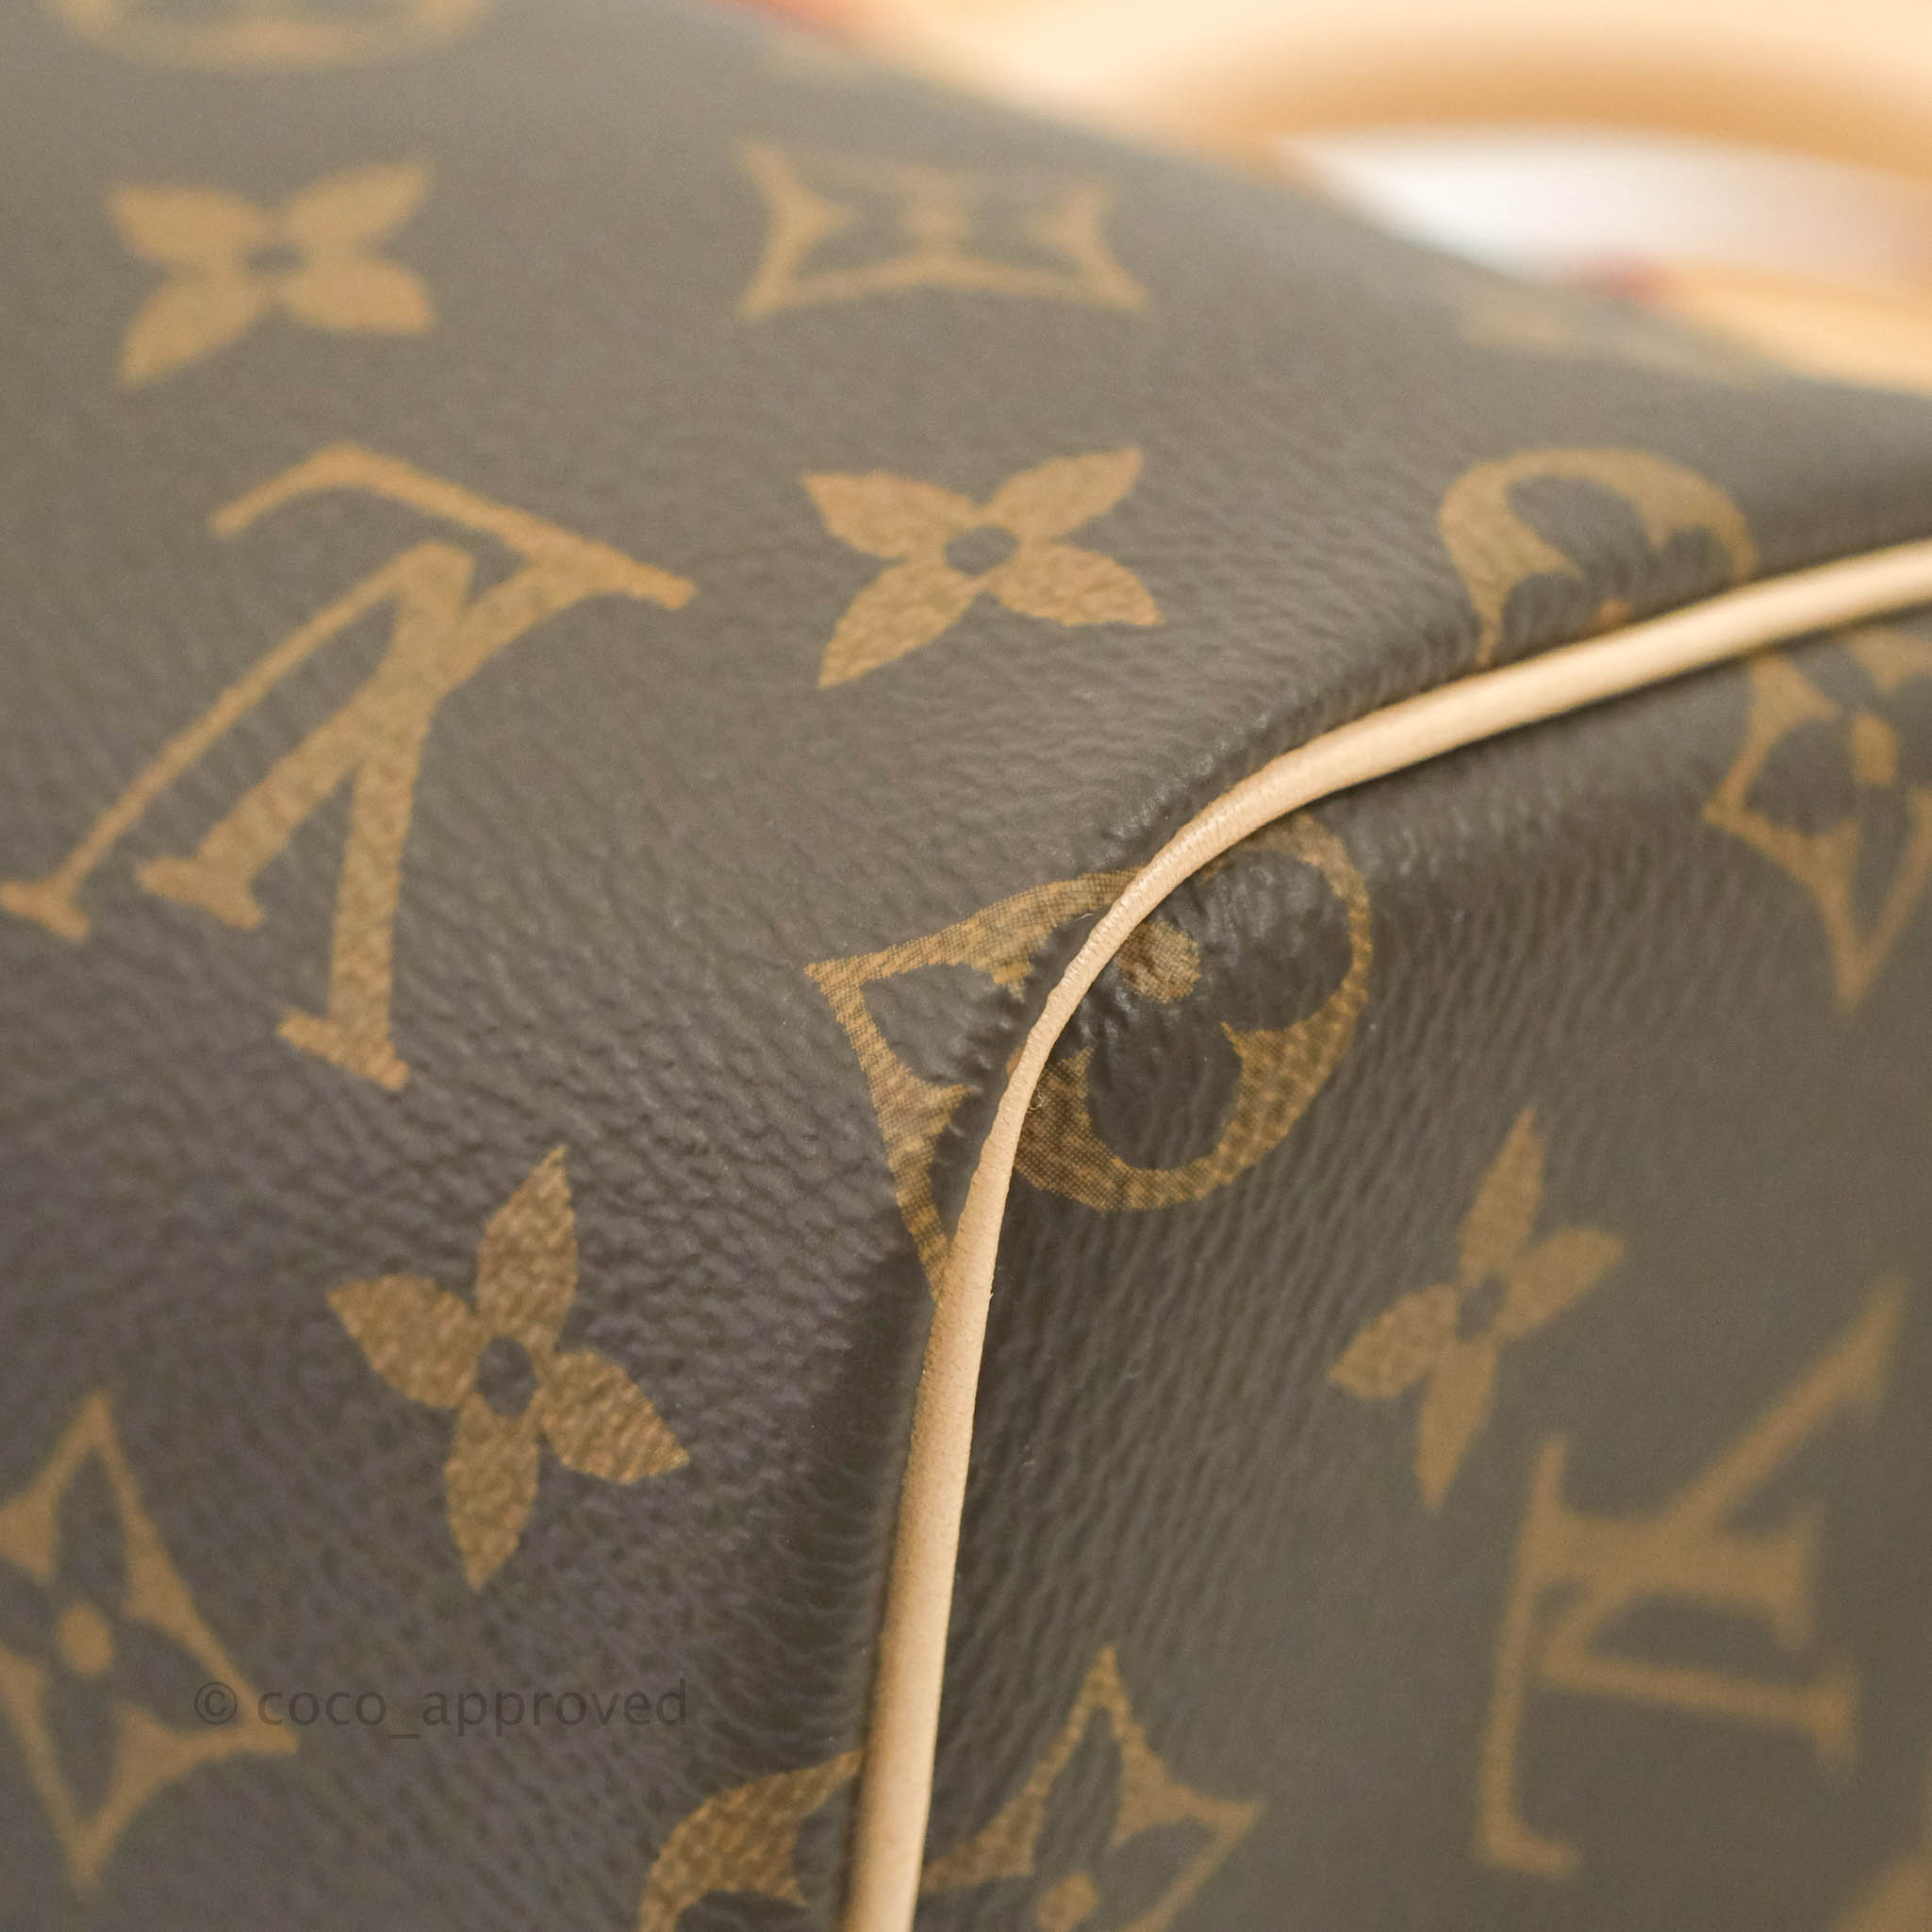 New Arrival alert! Preloved Louis Vuitton bags have just gone live on  luxeitfwd.com.au ✨ - Louis Vuitton Nano Speedy Monogram Empreinte…